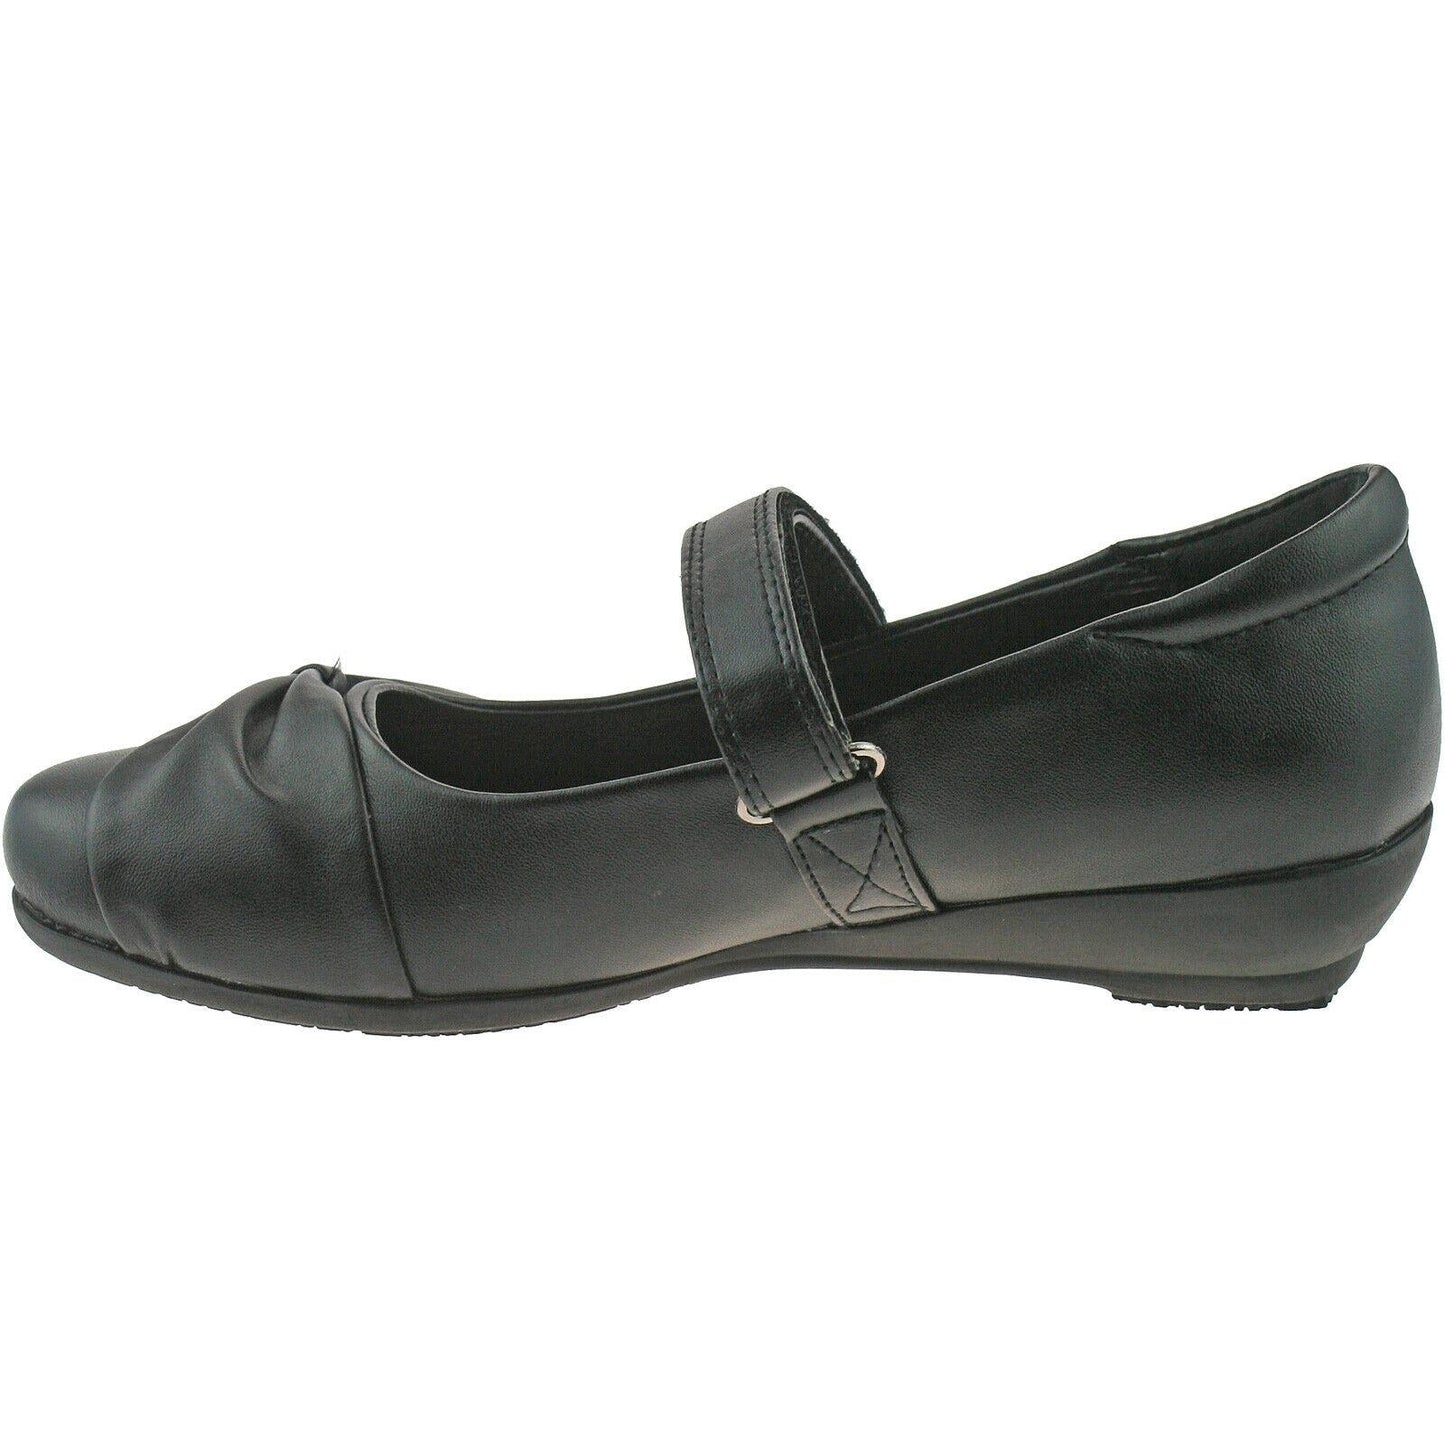 Girls US Brass Black School Casual Shoes Marlin G795A